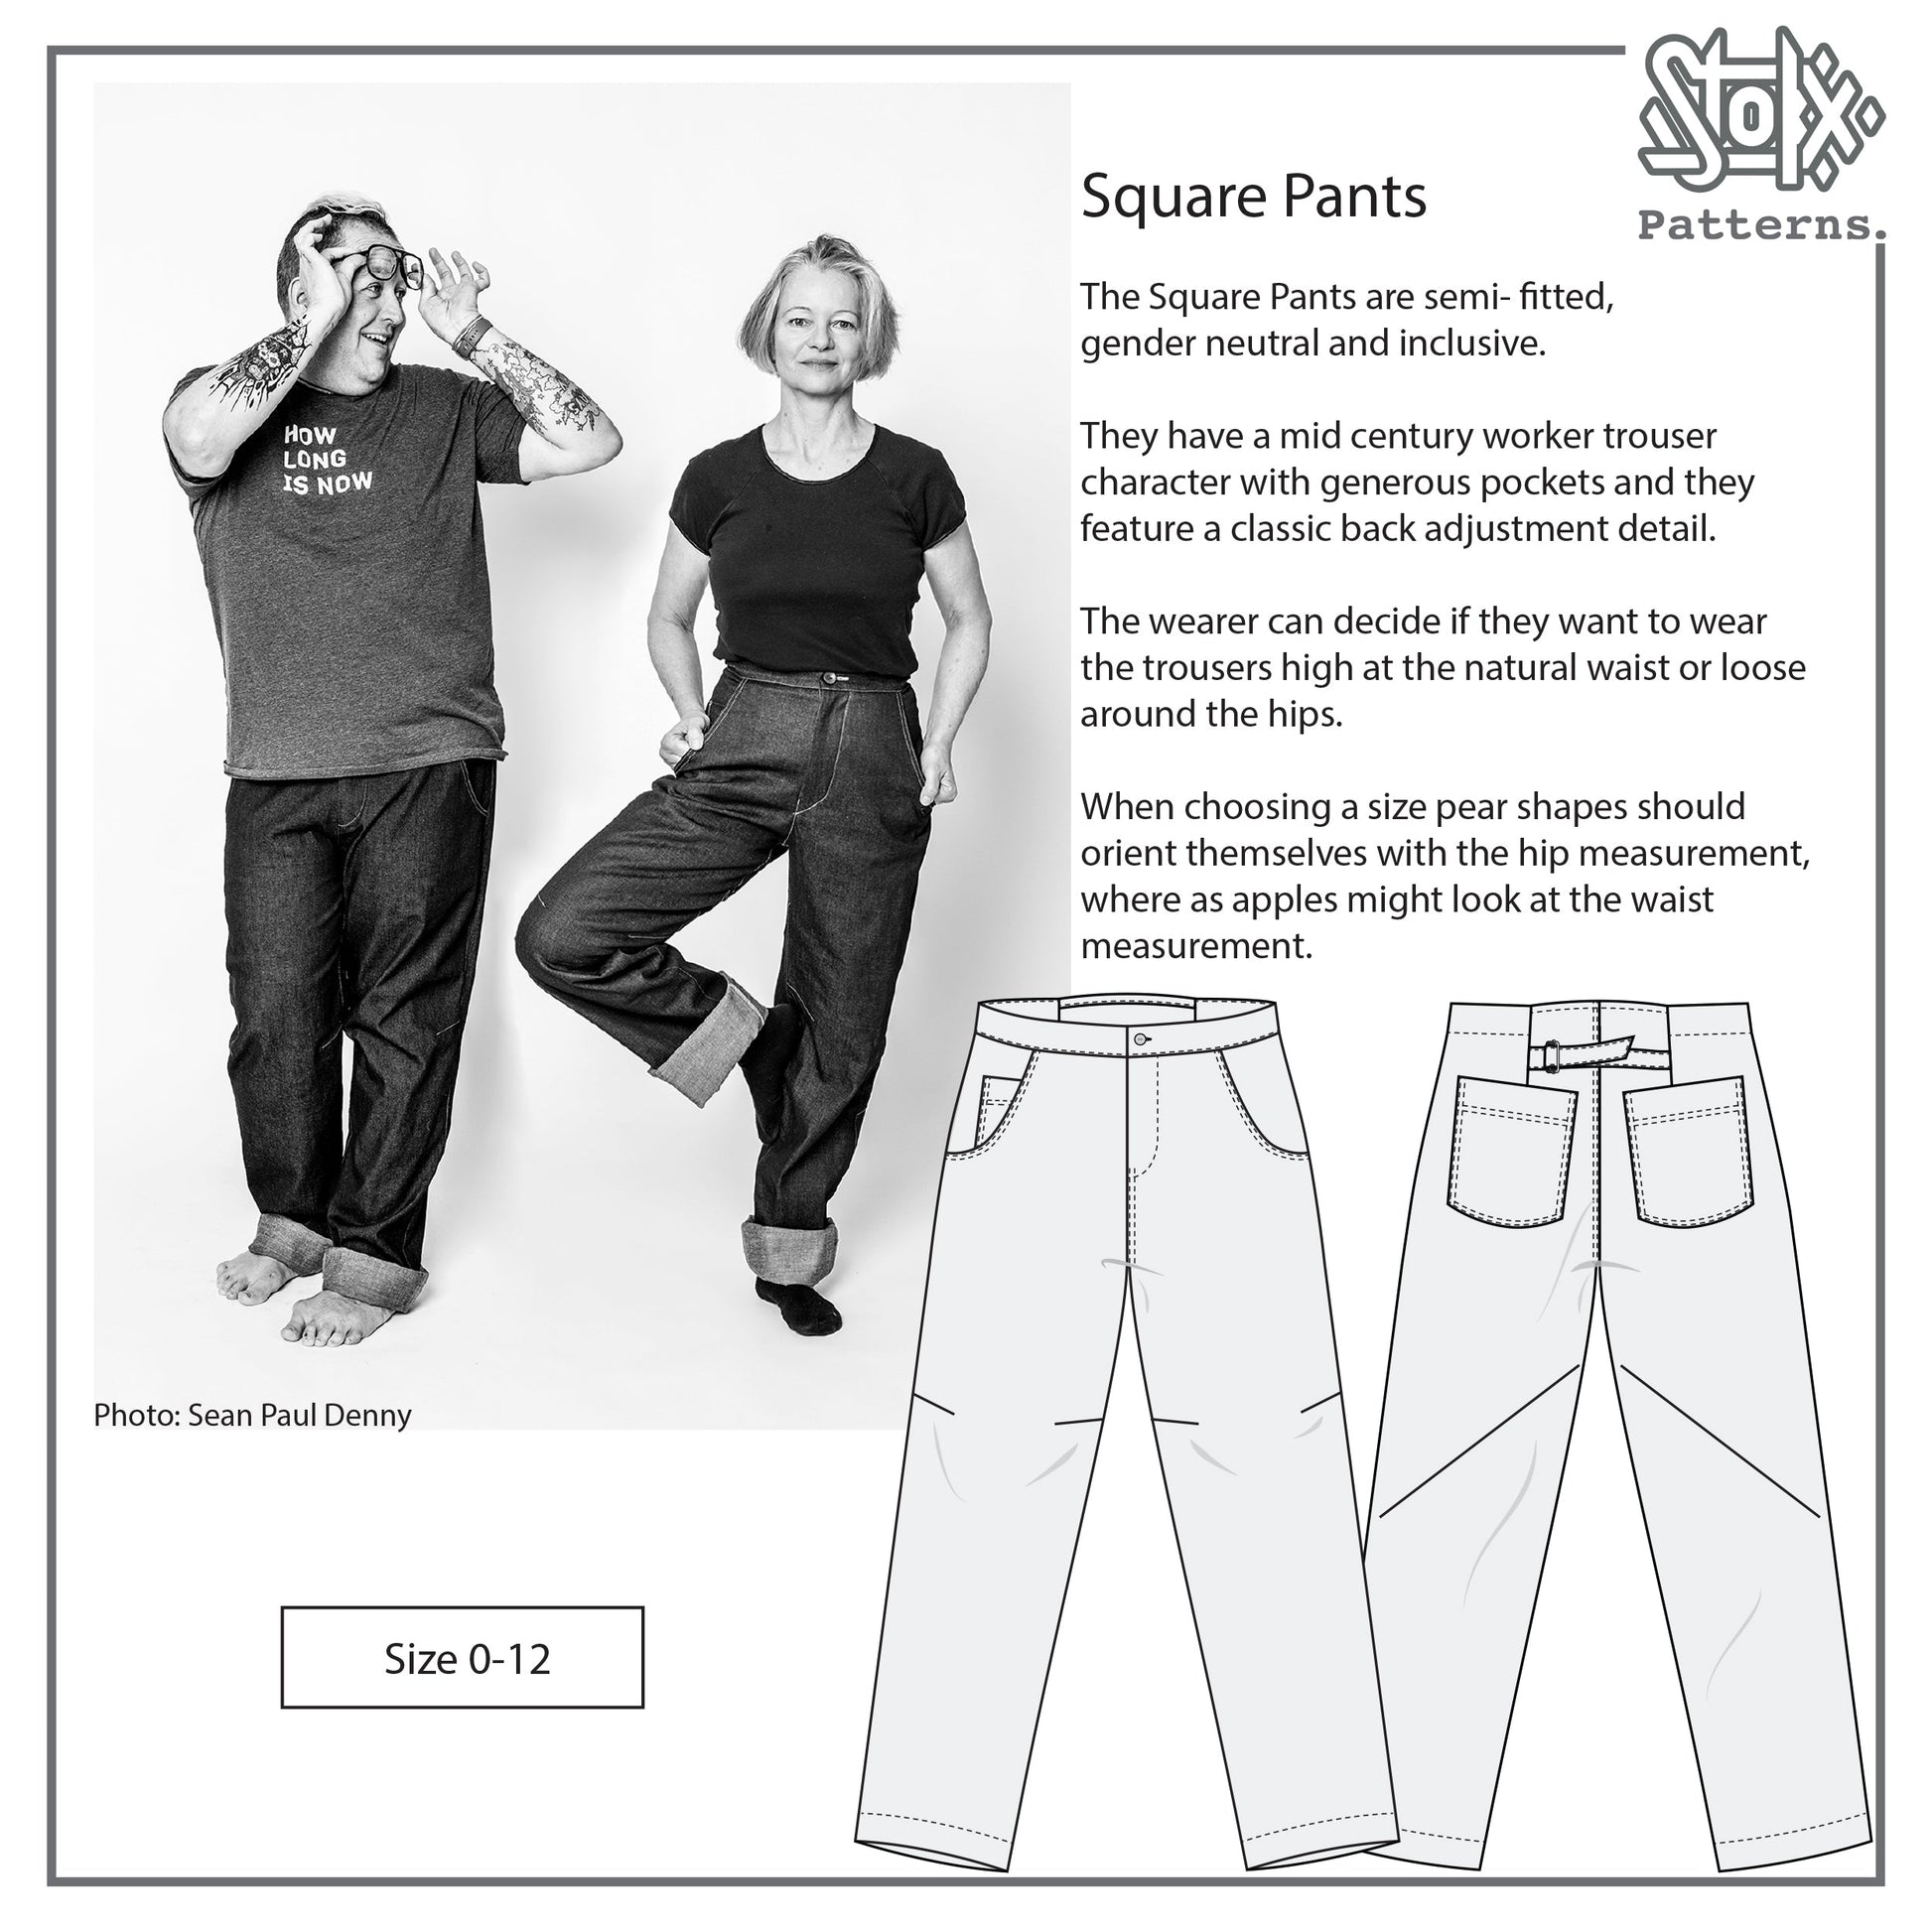 Square Pants – Stokx Patterns